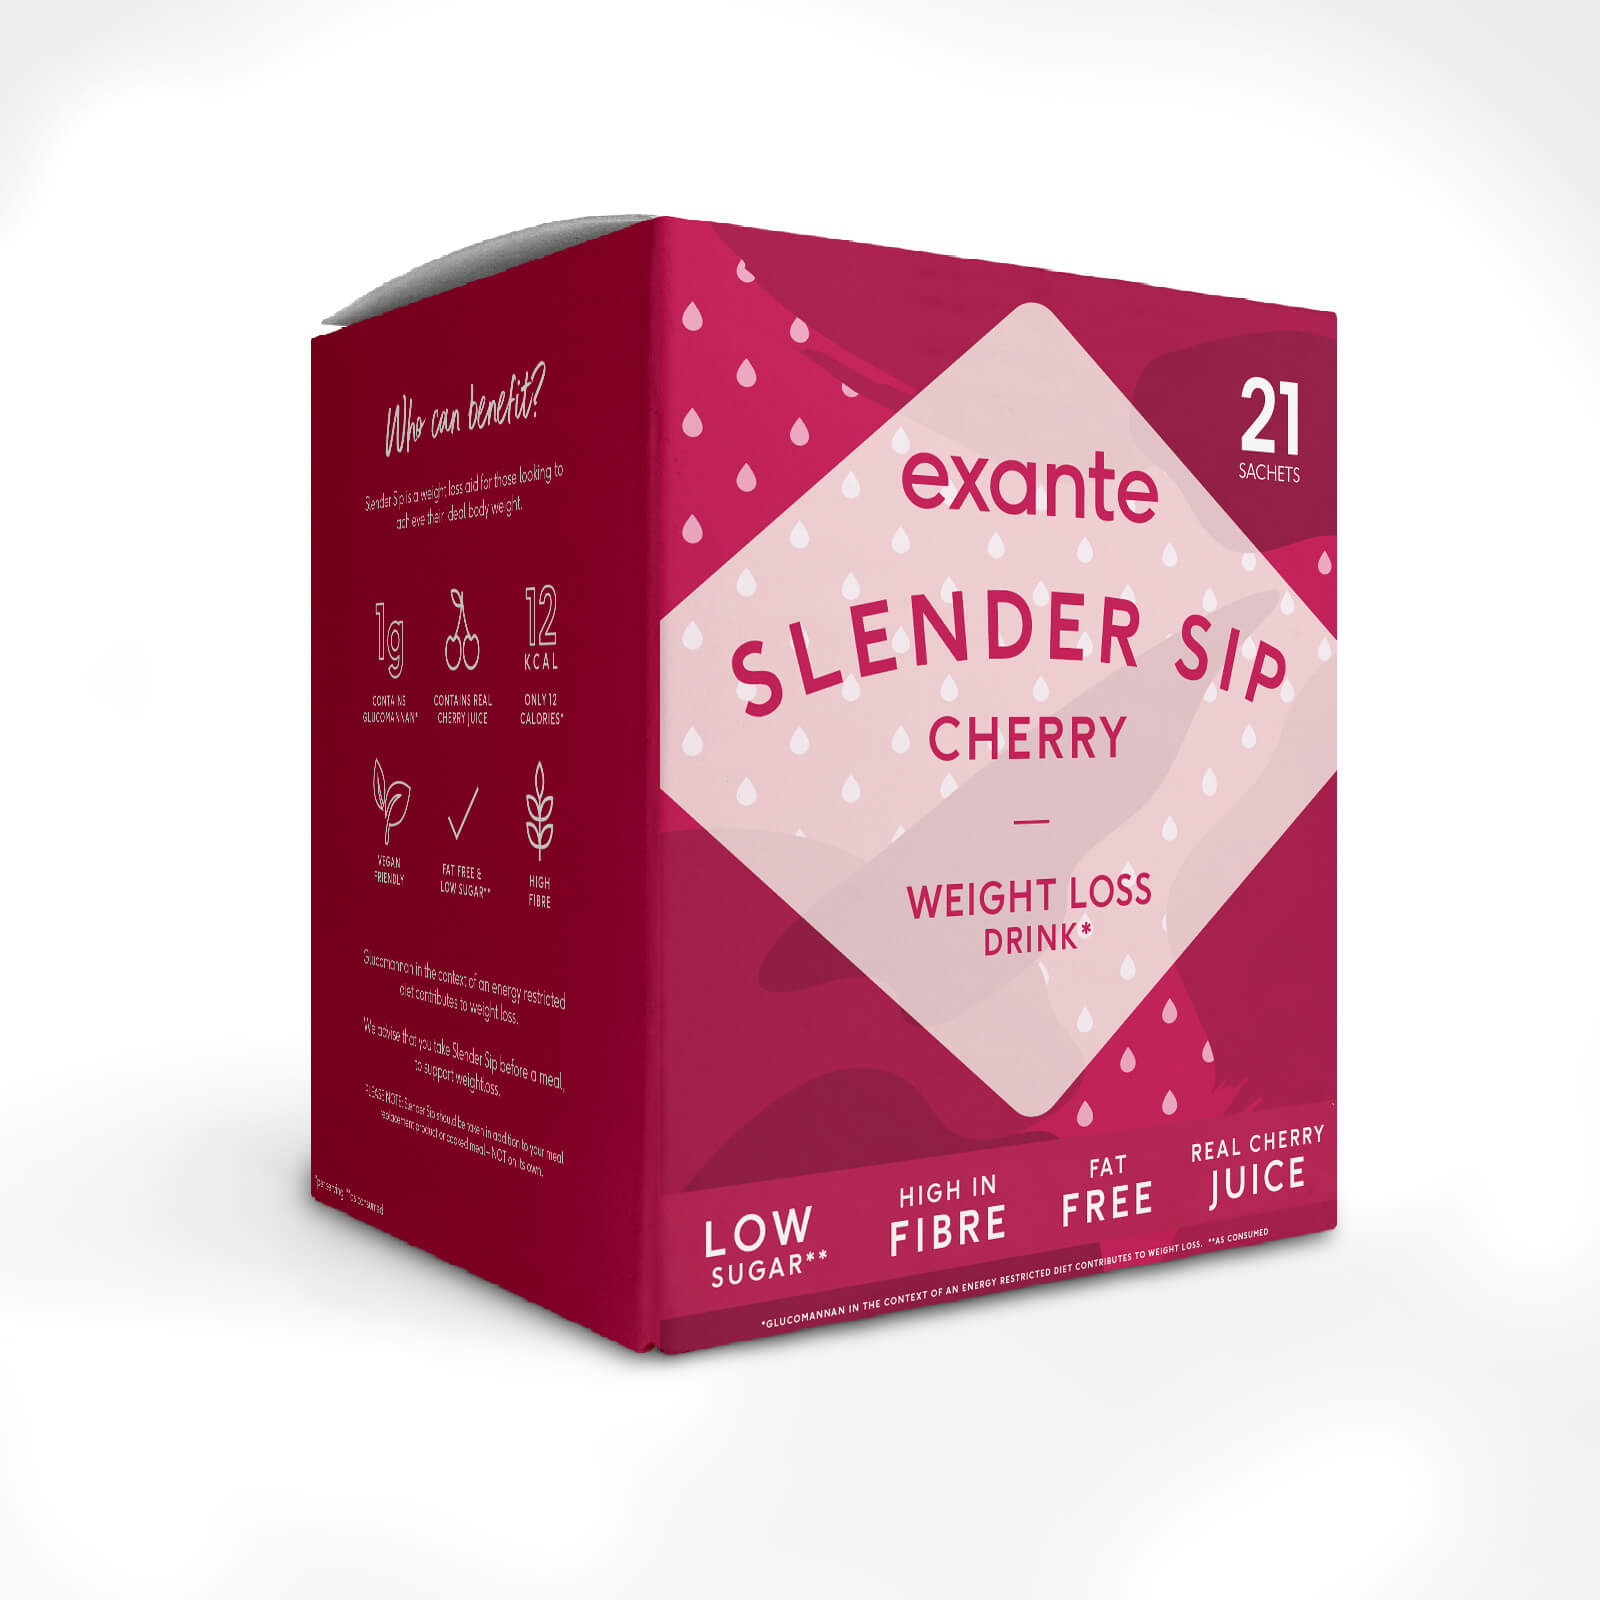 Exante Diet exante Cherry Slender Sip - 7 Days